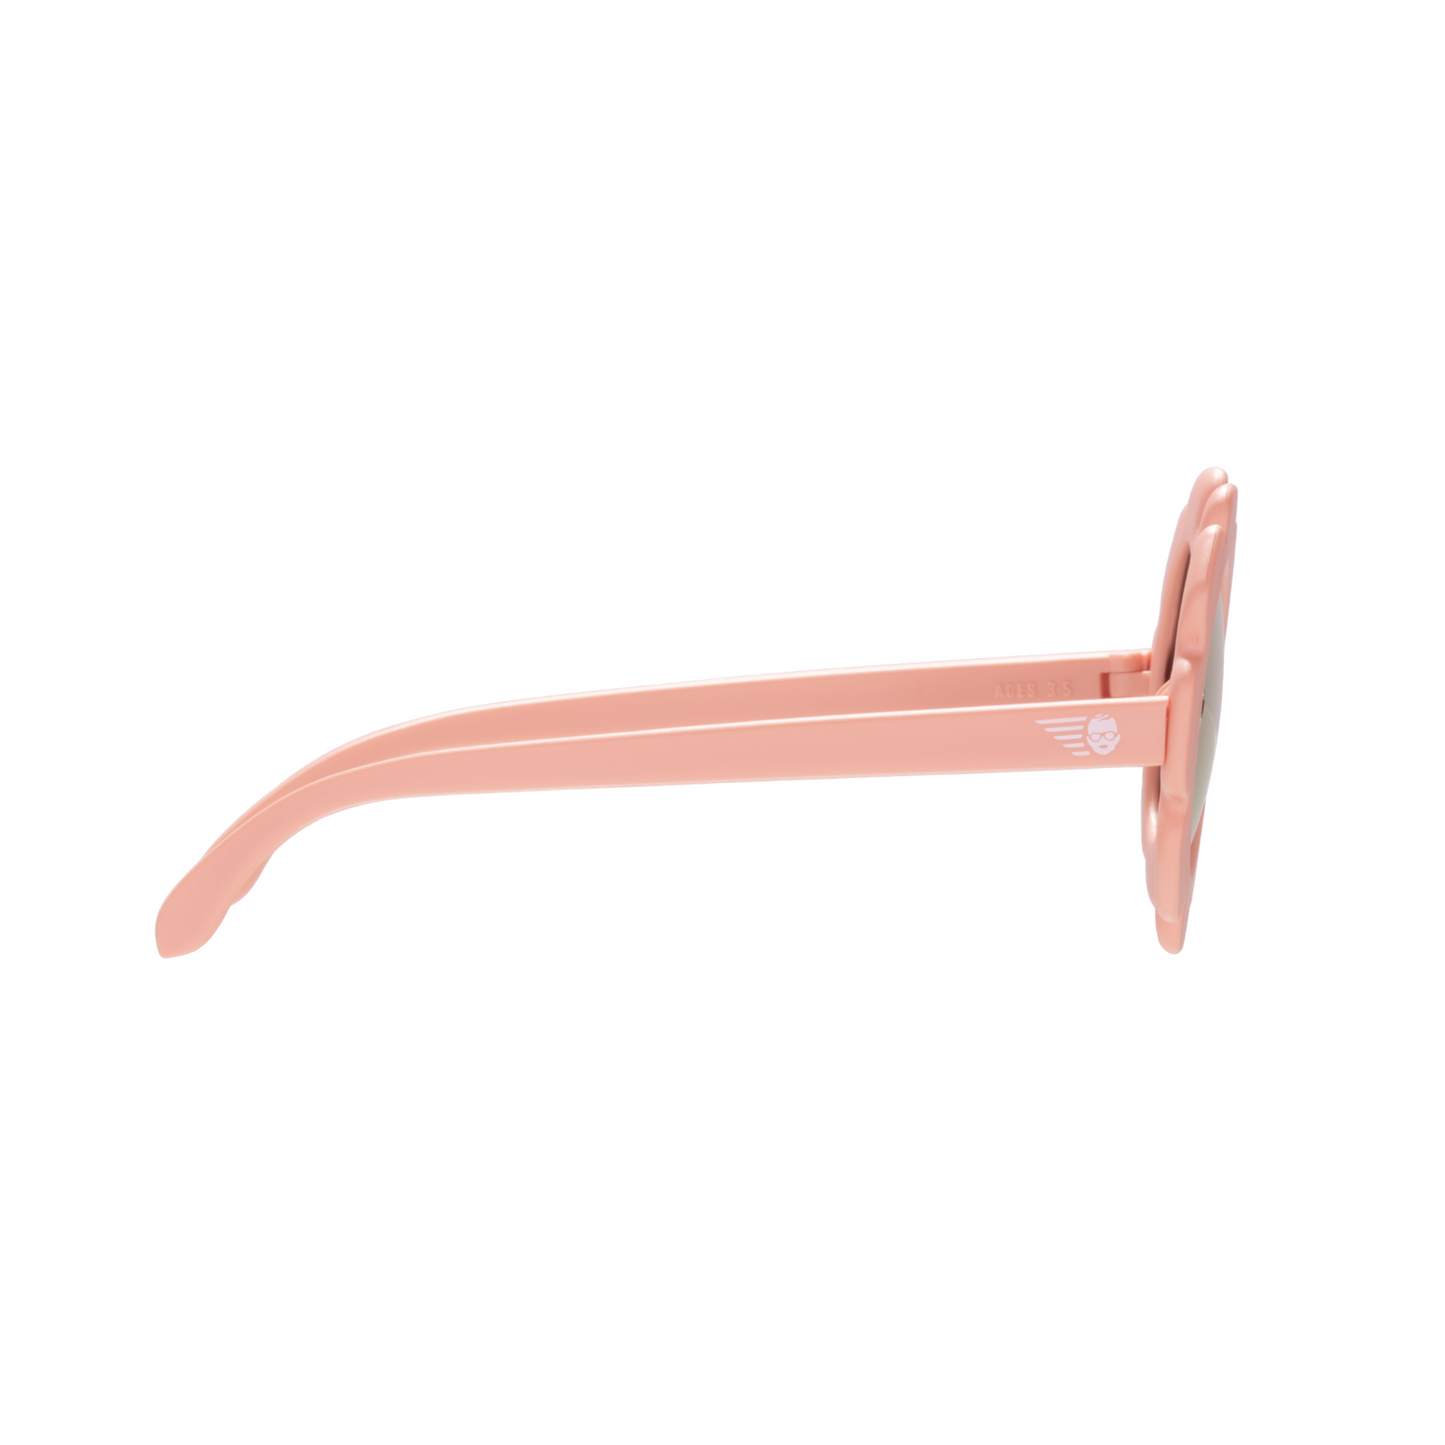 The Flower Child: Pink Flower w/ Polarized TBD lens Sunglasses